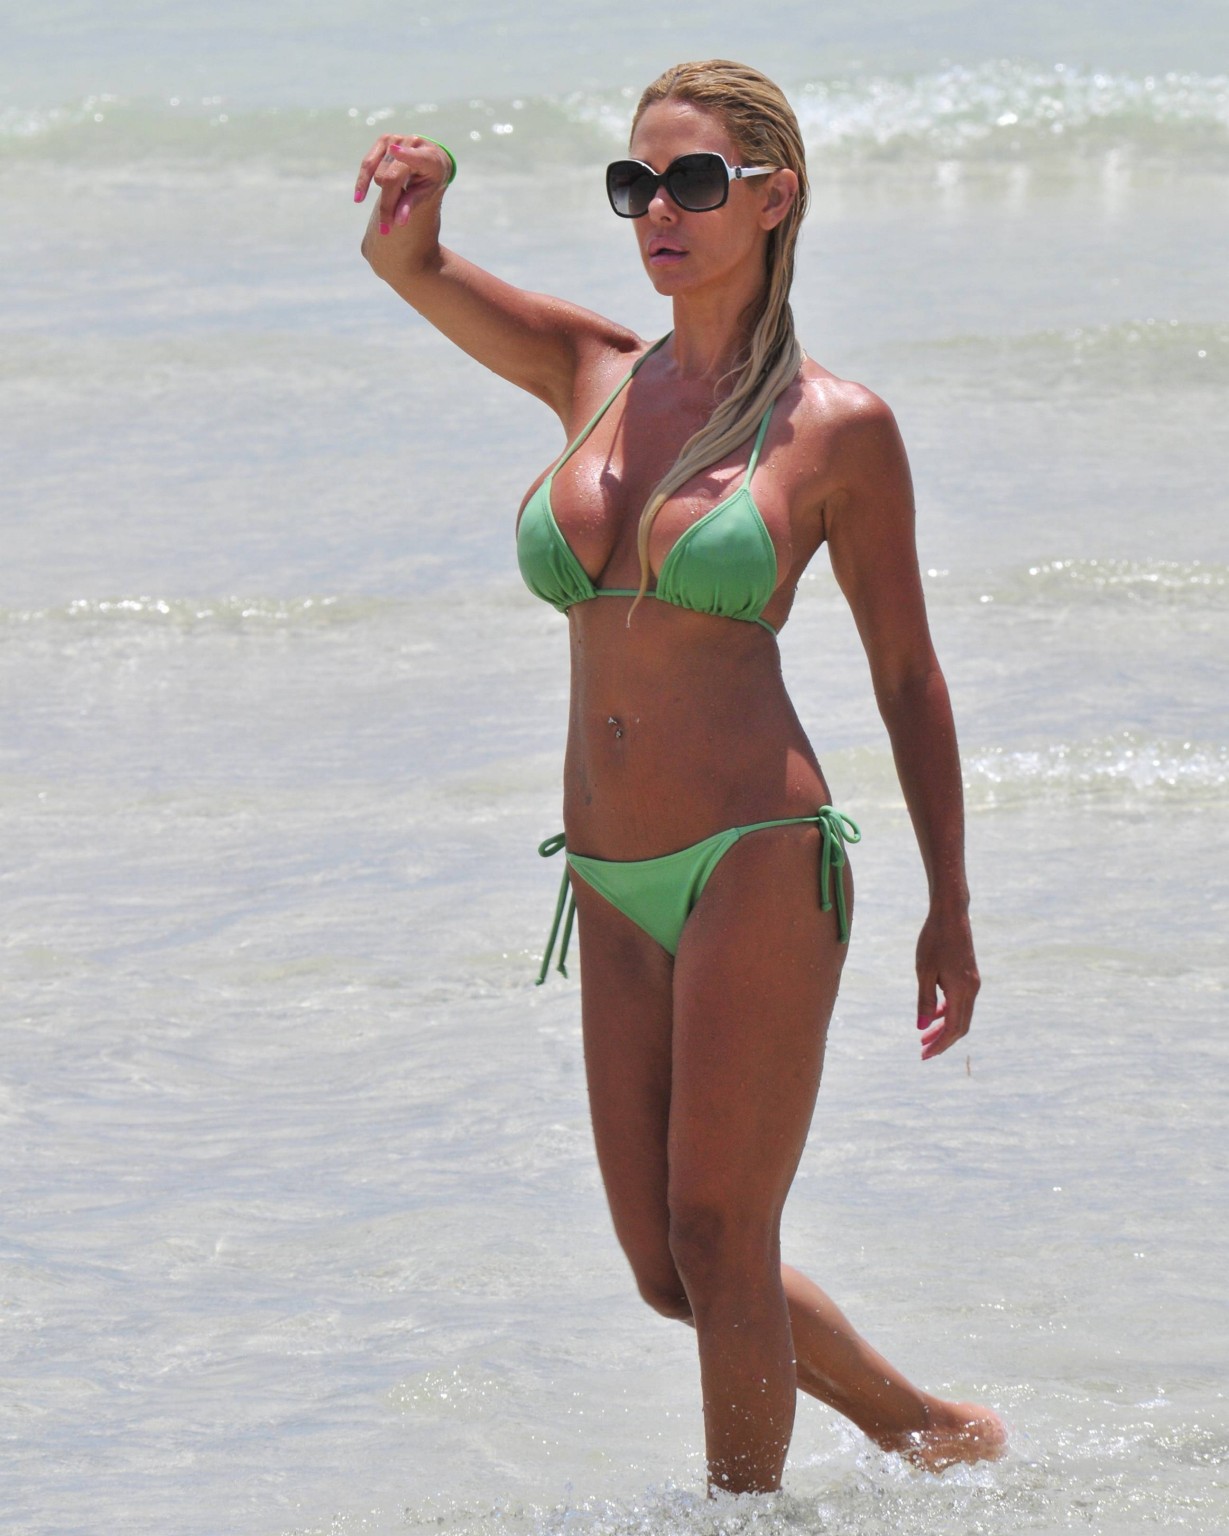 Shauna sand con un bikini verde en la playa de Miami
 #75296649